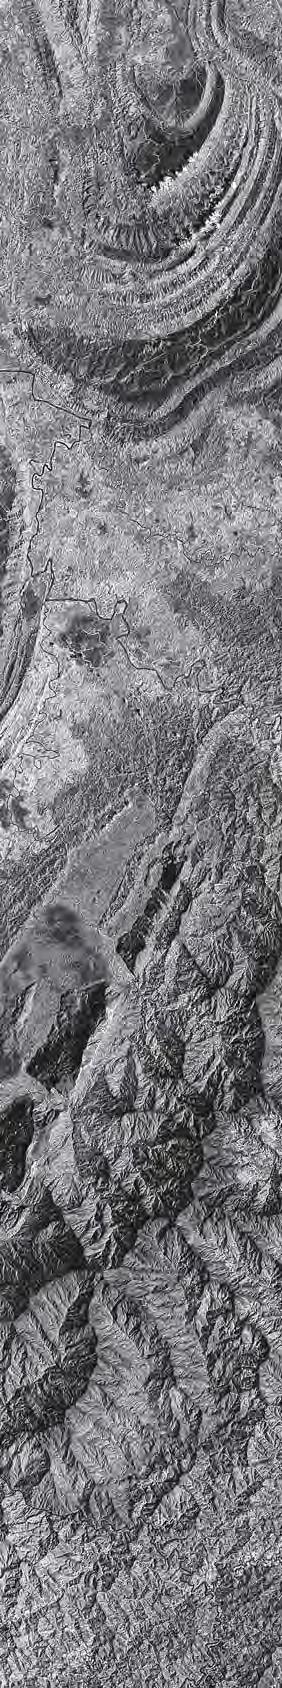 PP 3279/4/2008 ISSN 0126 6187 BULETIN PERSATUAN GEOLOGI MALAYSIA KANDUNGAN / CONTENTS 1-6 Discovery of a Lower Devonian Dacryoconarid bed from Hill B Guar Jentik, Perlis: Its significance and